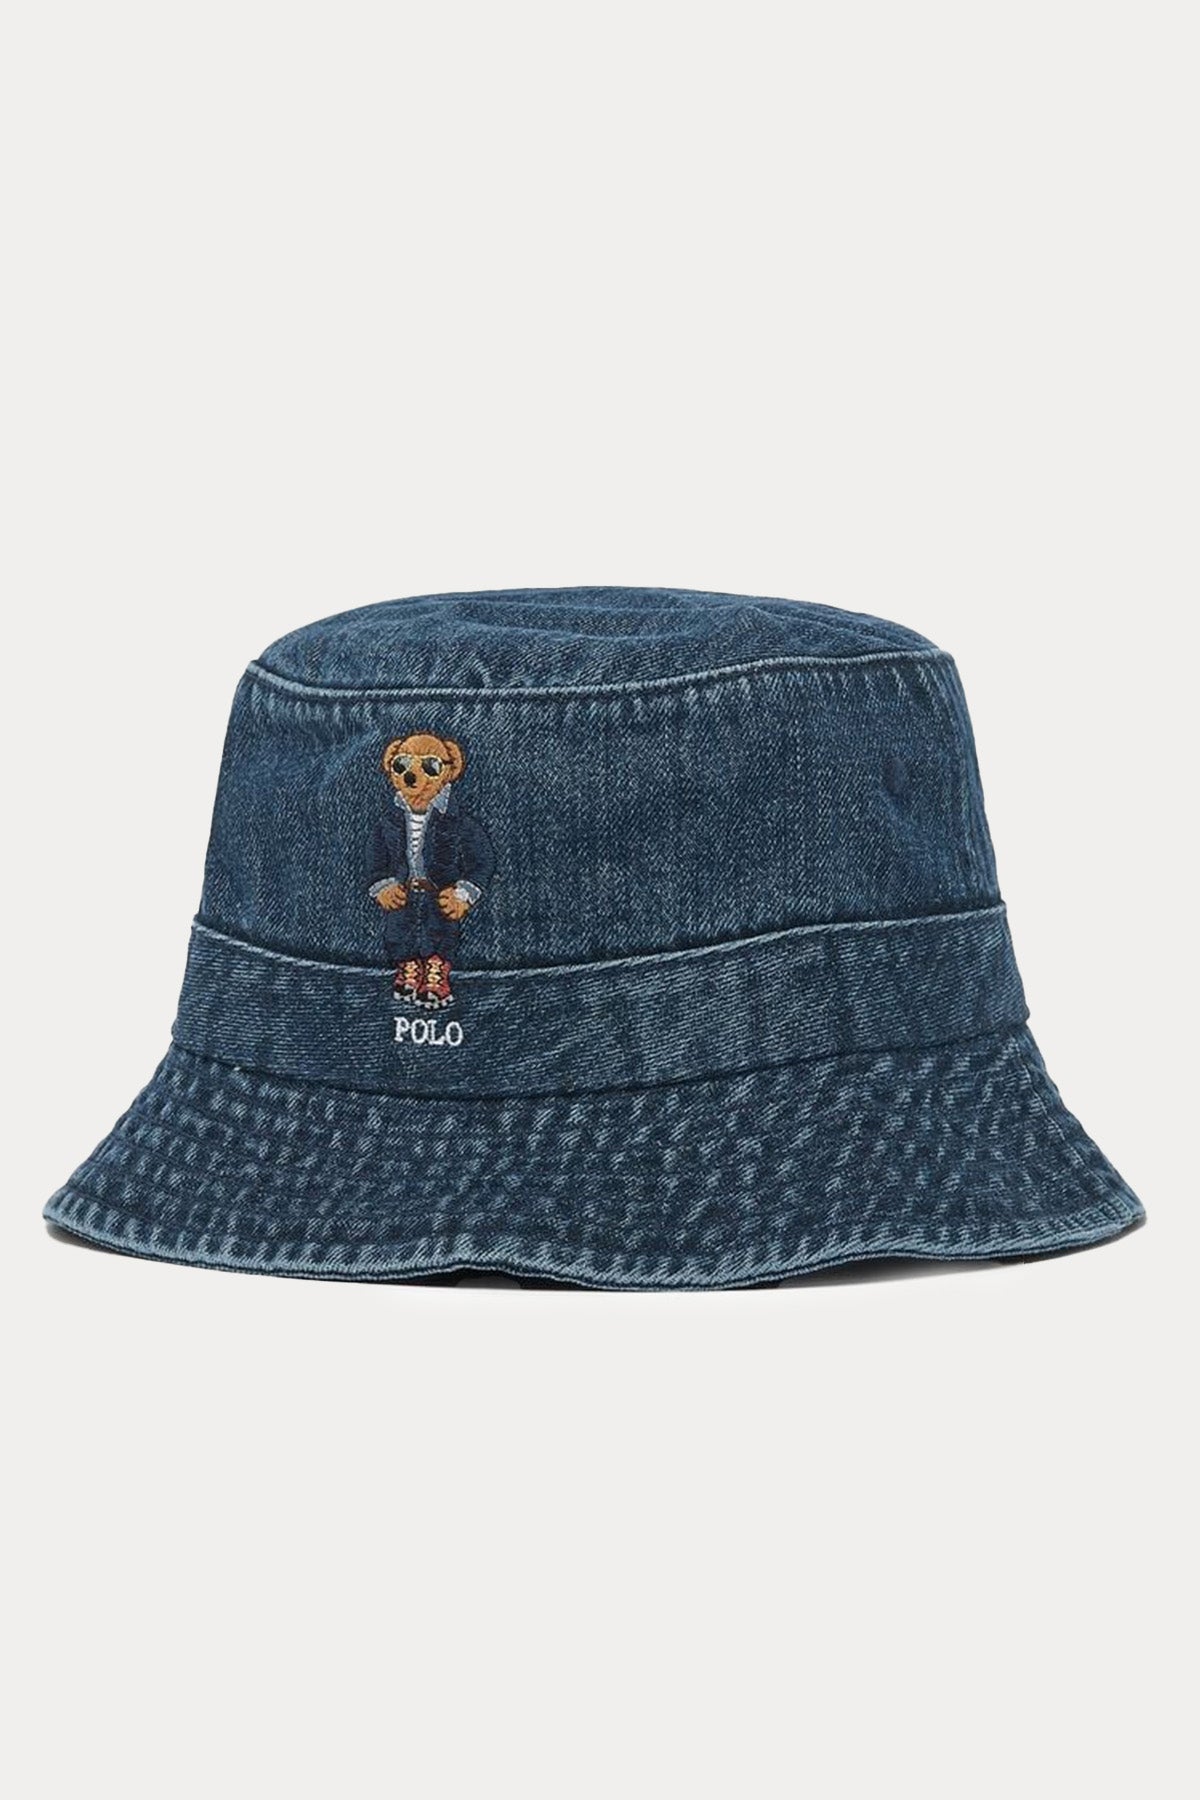 Polo Ralph Lauren Polo Bear Denim Bucket Şapka